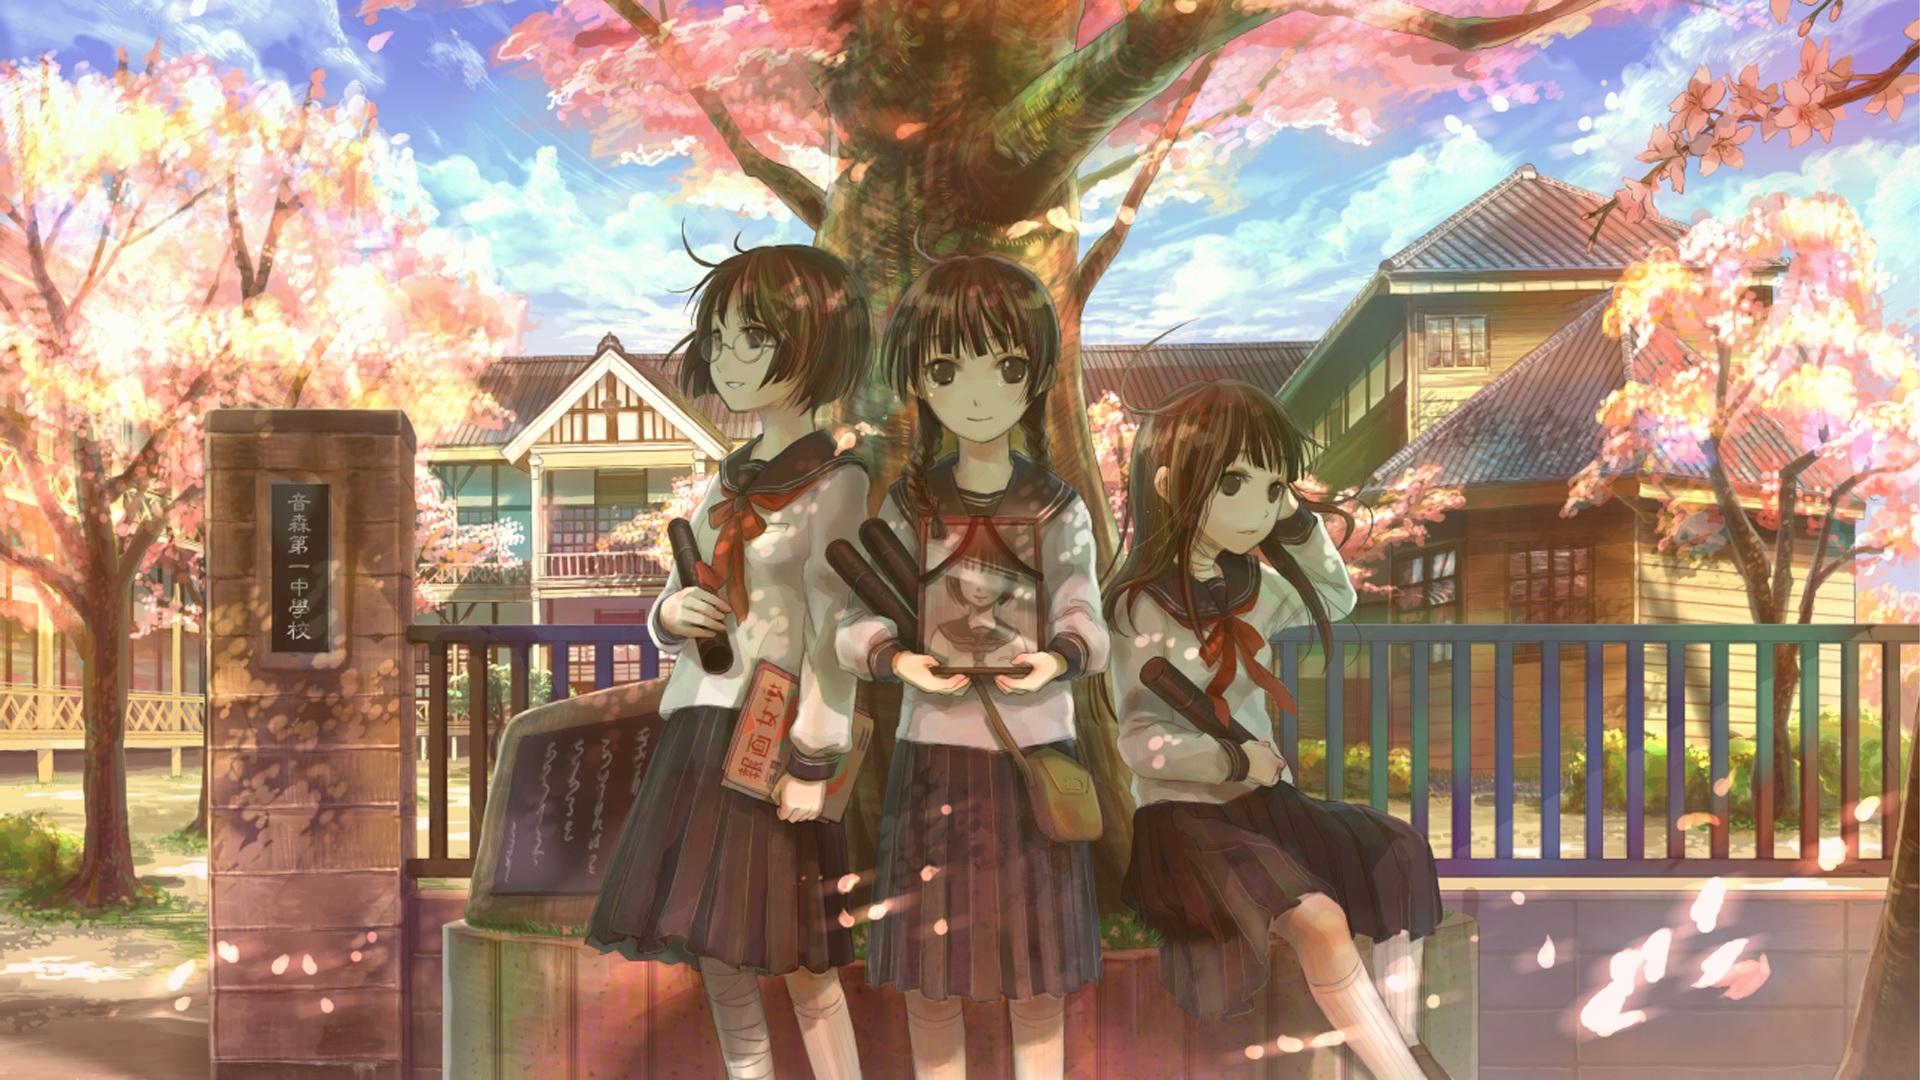 Anime Girl HD Wallpaper by Fuji Choko